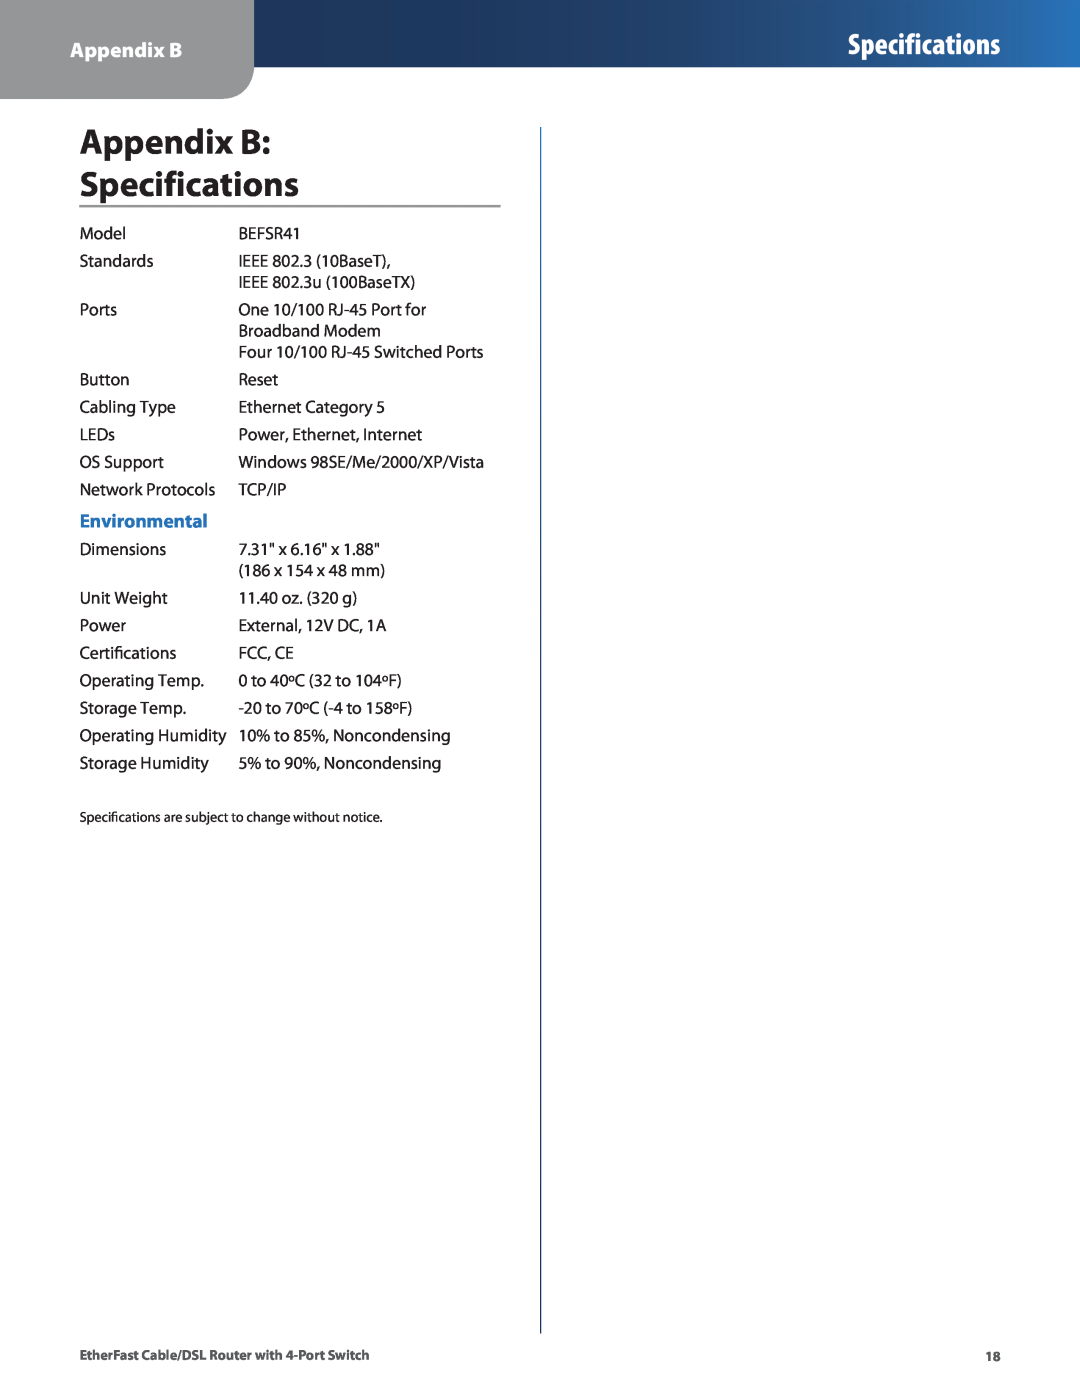 Honeywell HEMS II manual Appendix B Specifications, Environmental 